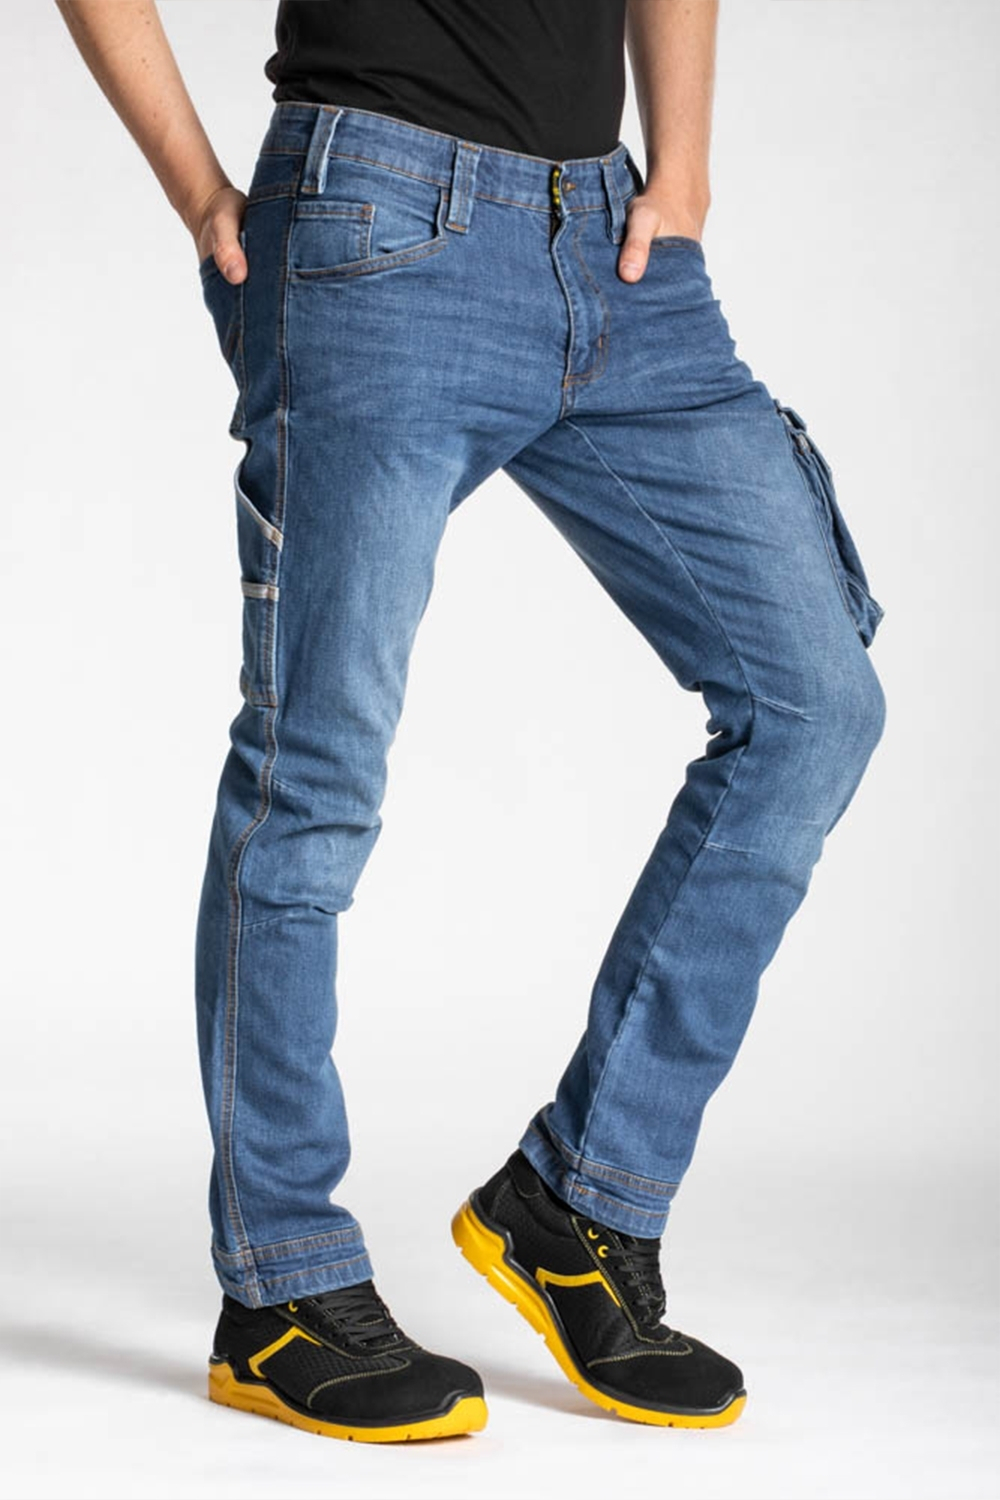 Rica Lewis Kalhoty do pasu RICA LEWIS JOB jeans vel.60